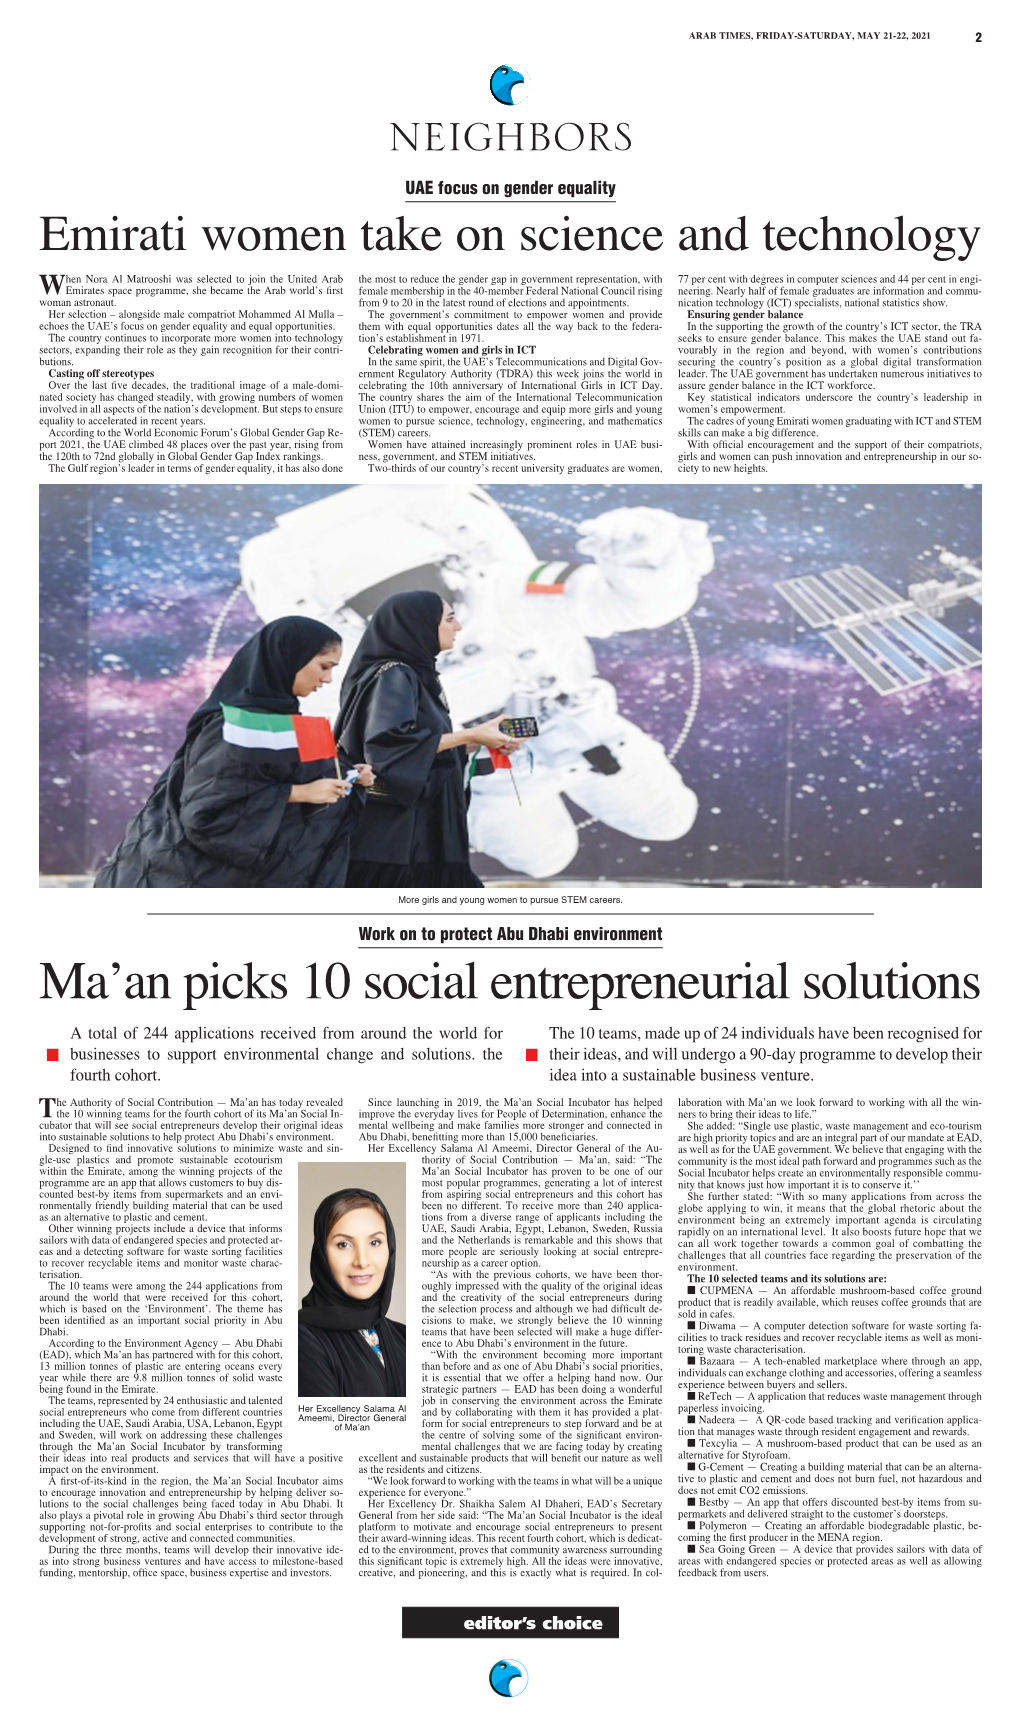 Ma'an Picks 10 Social Entrepreneurial Solutions